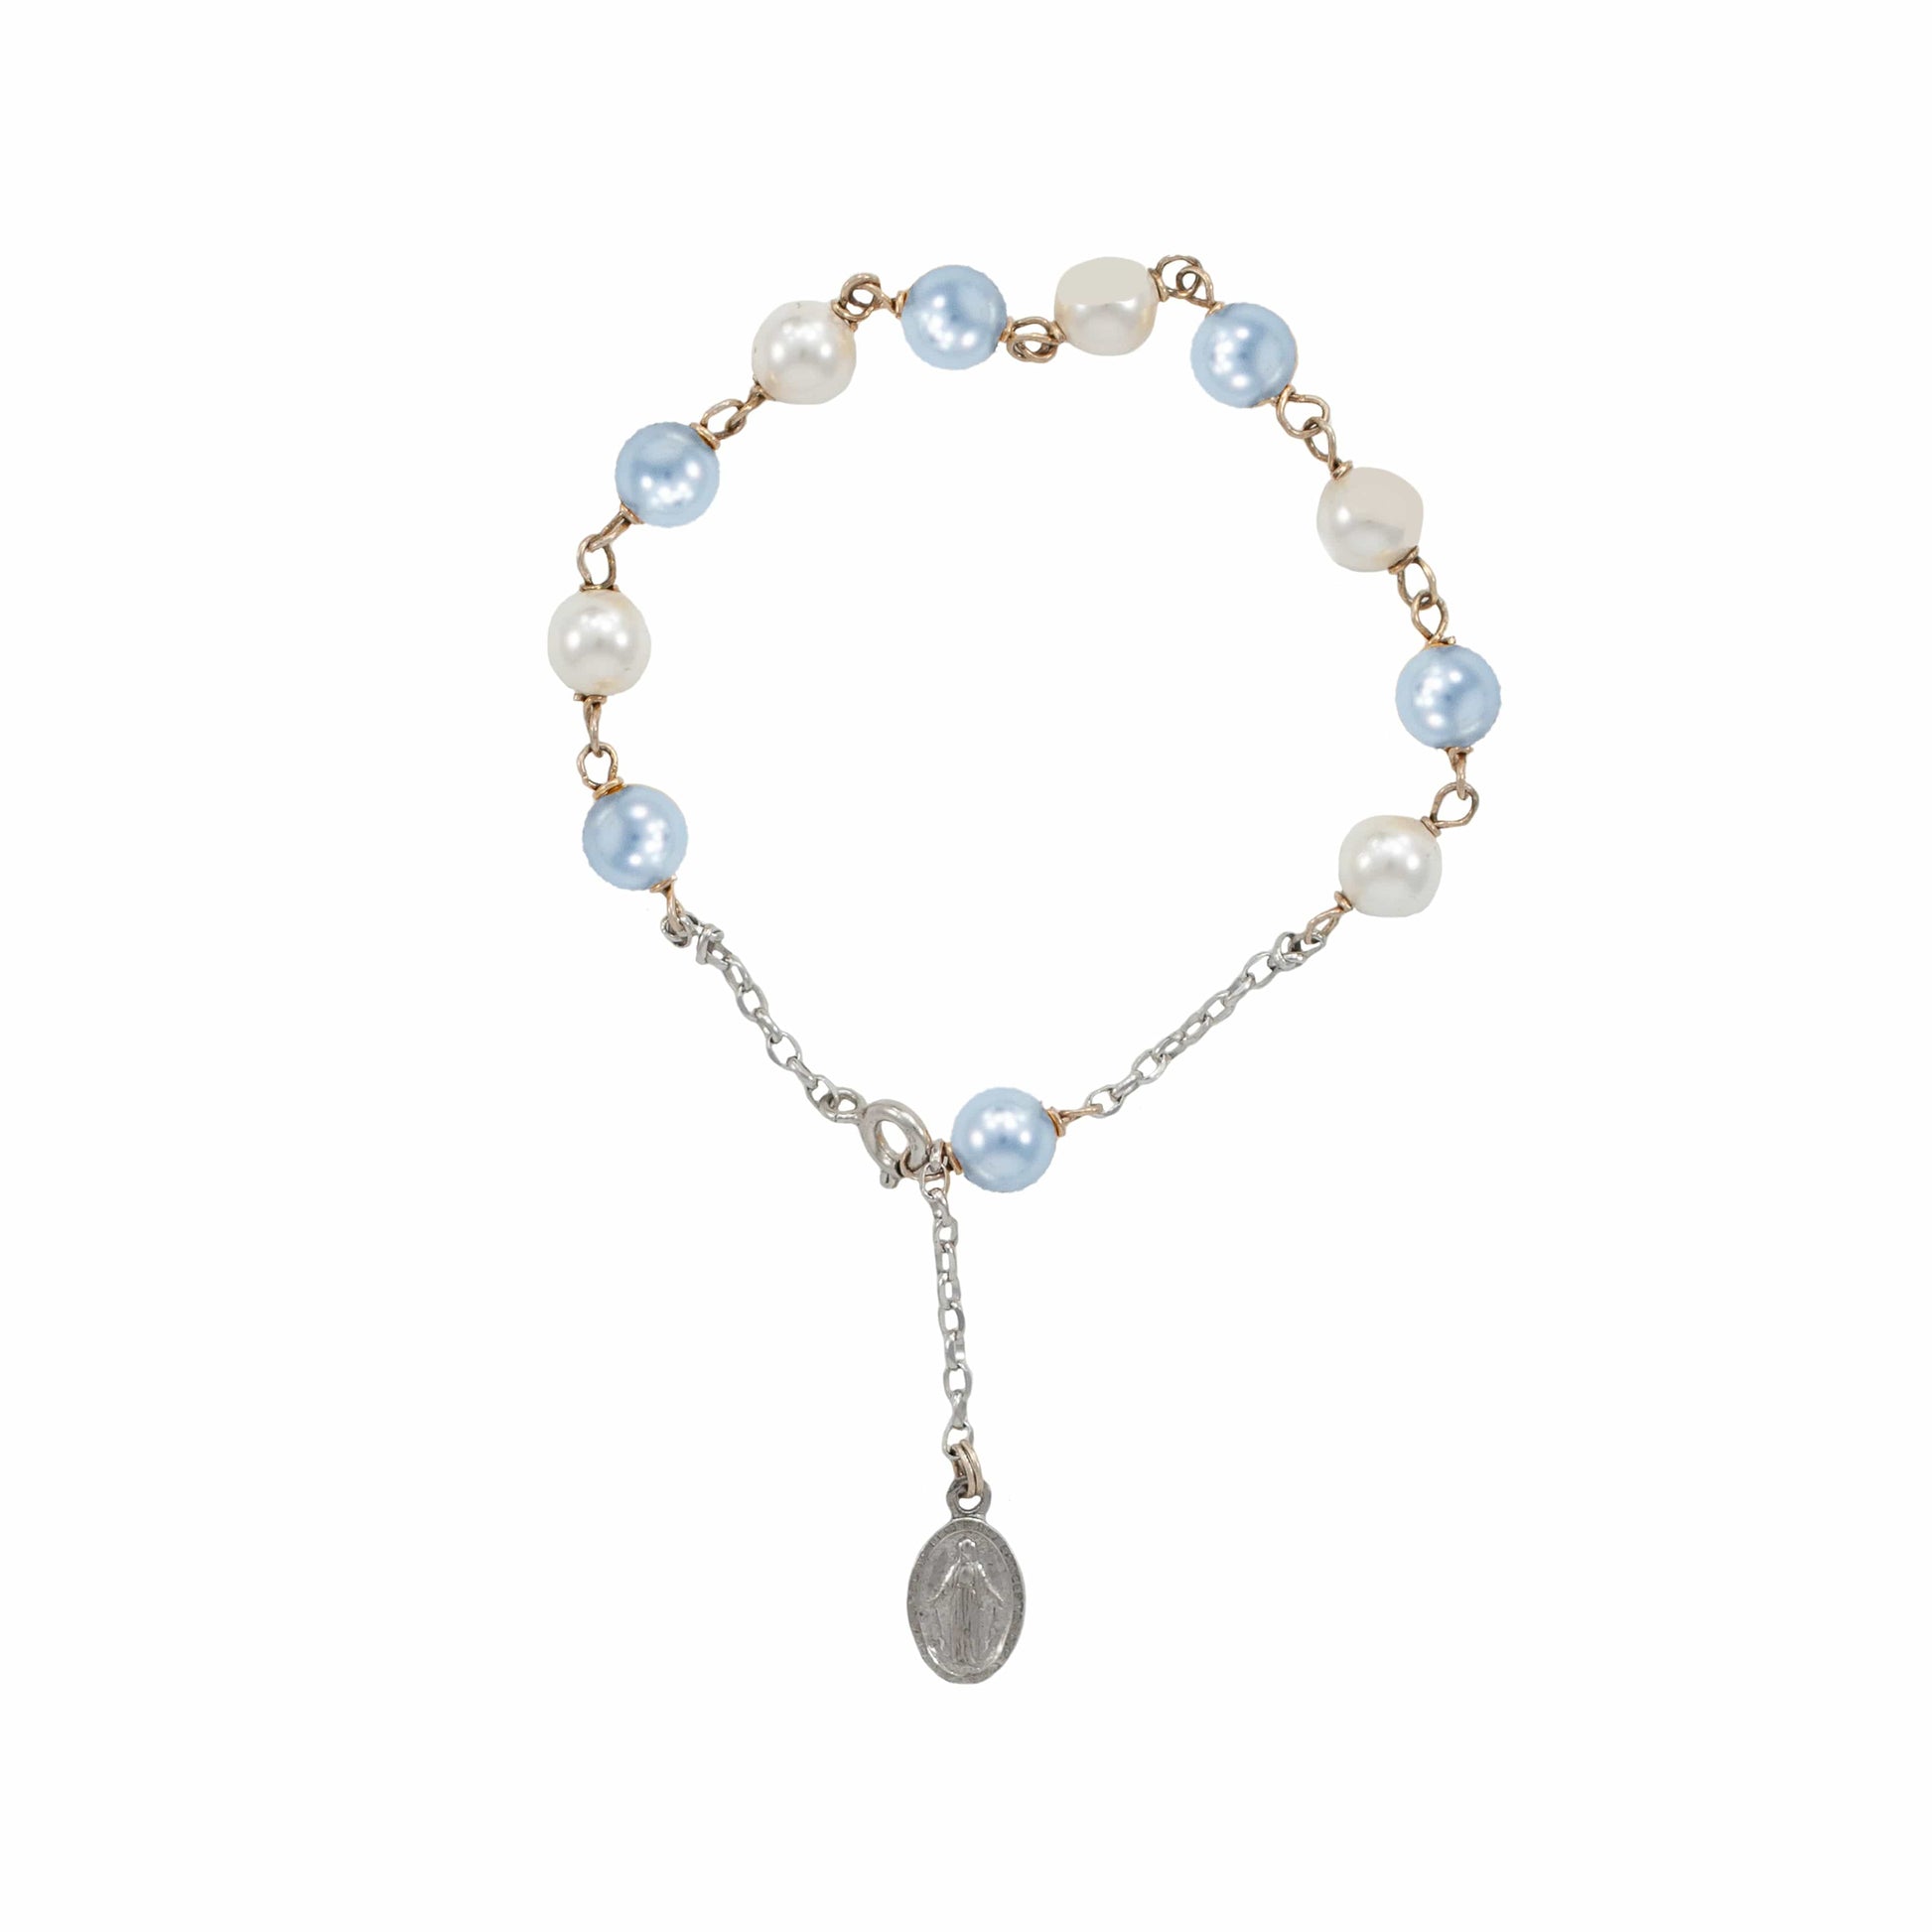 MONDO CATTOLICO Prayer Beads Adjustable Sterling Silver Rosary Bracelet Swarovski Crystal White and Light Blue Beads